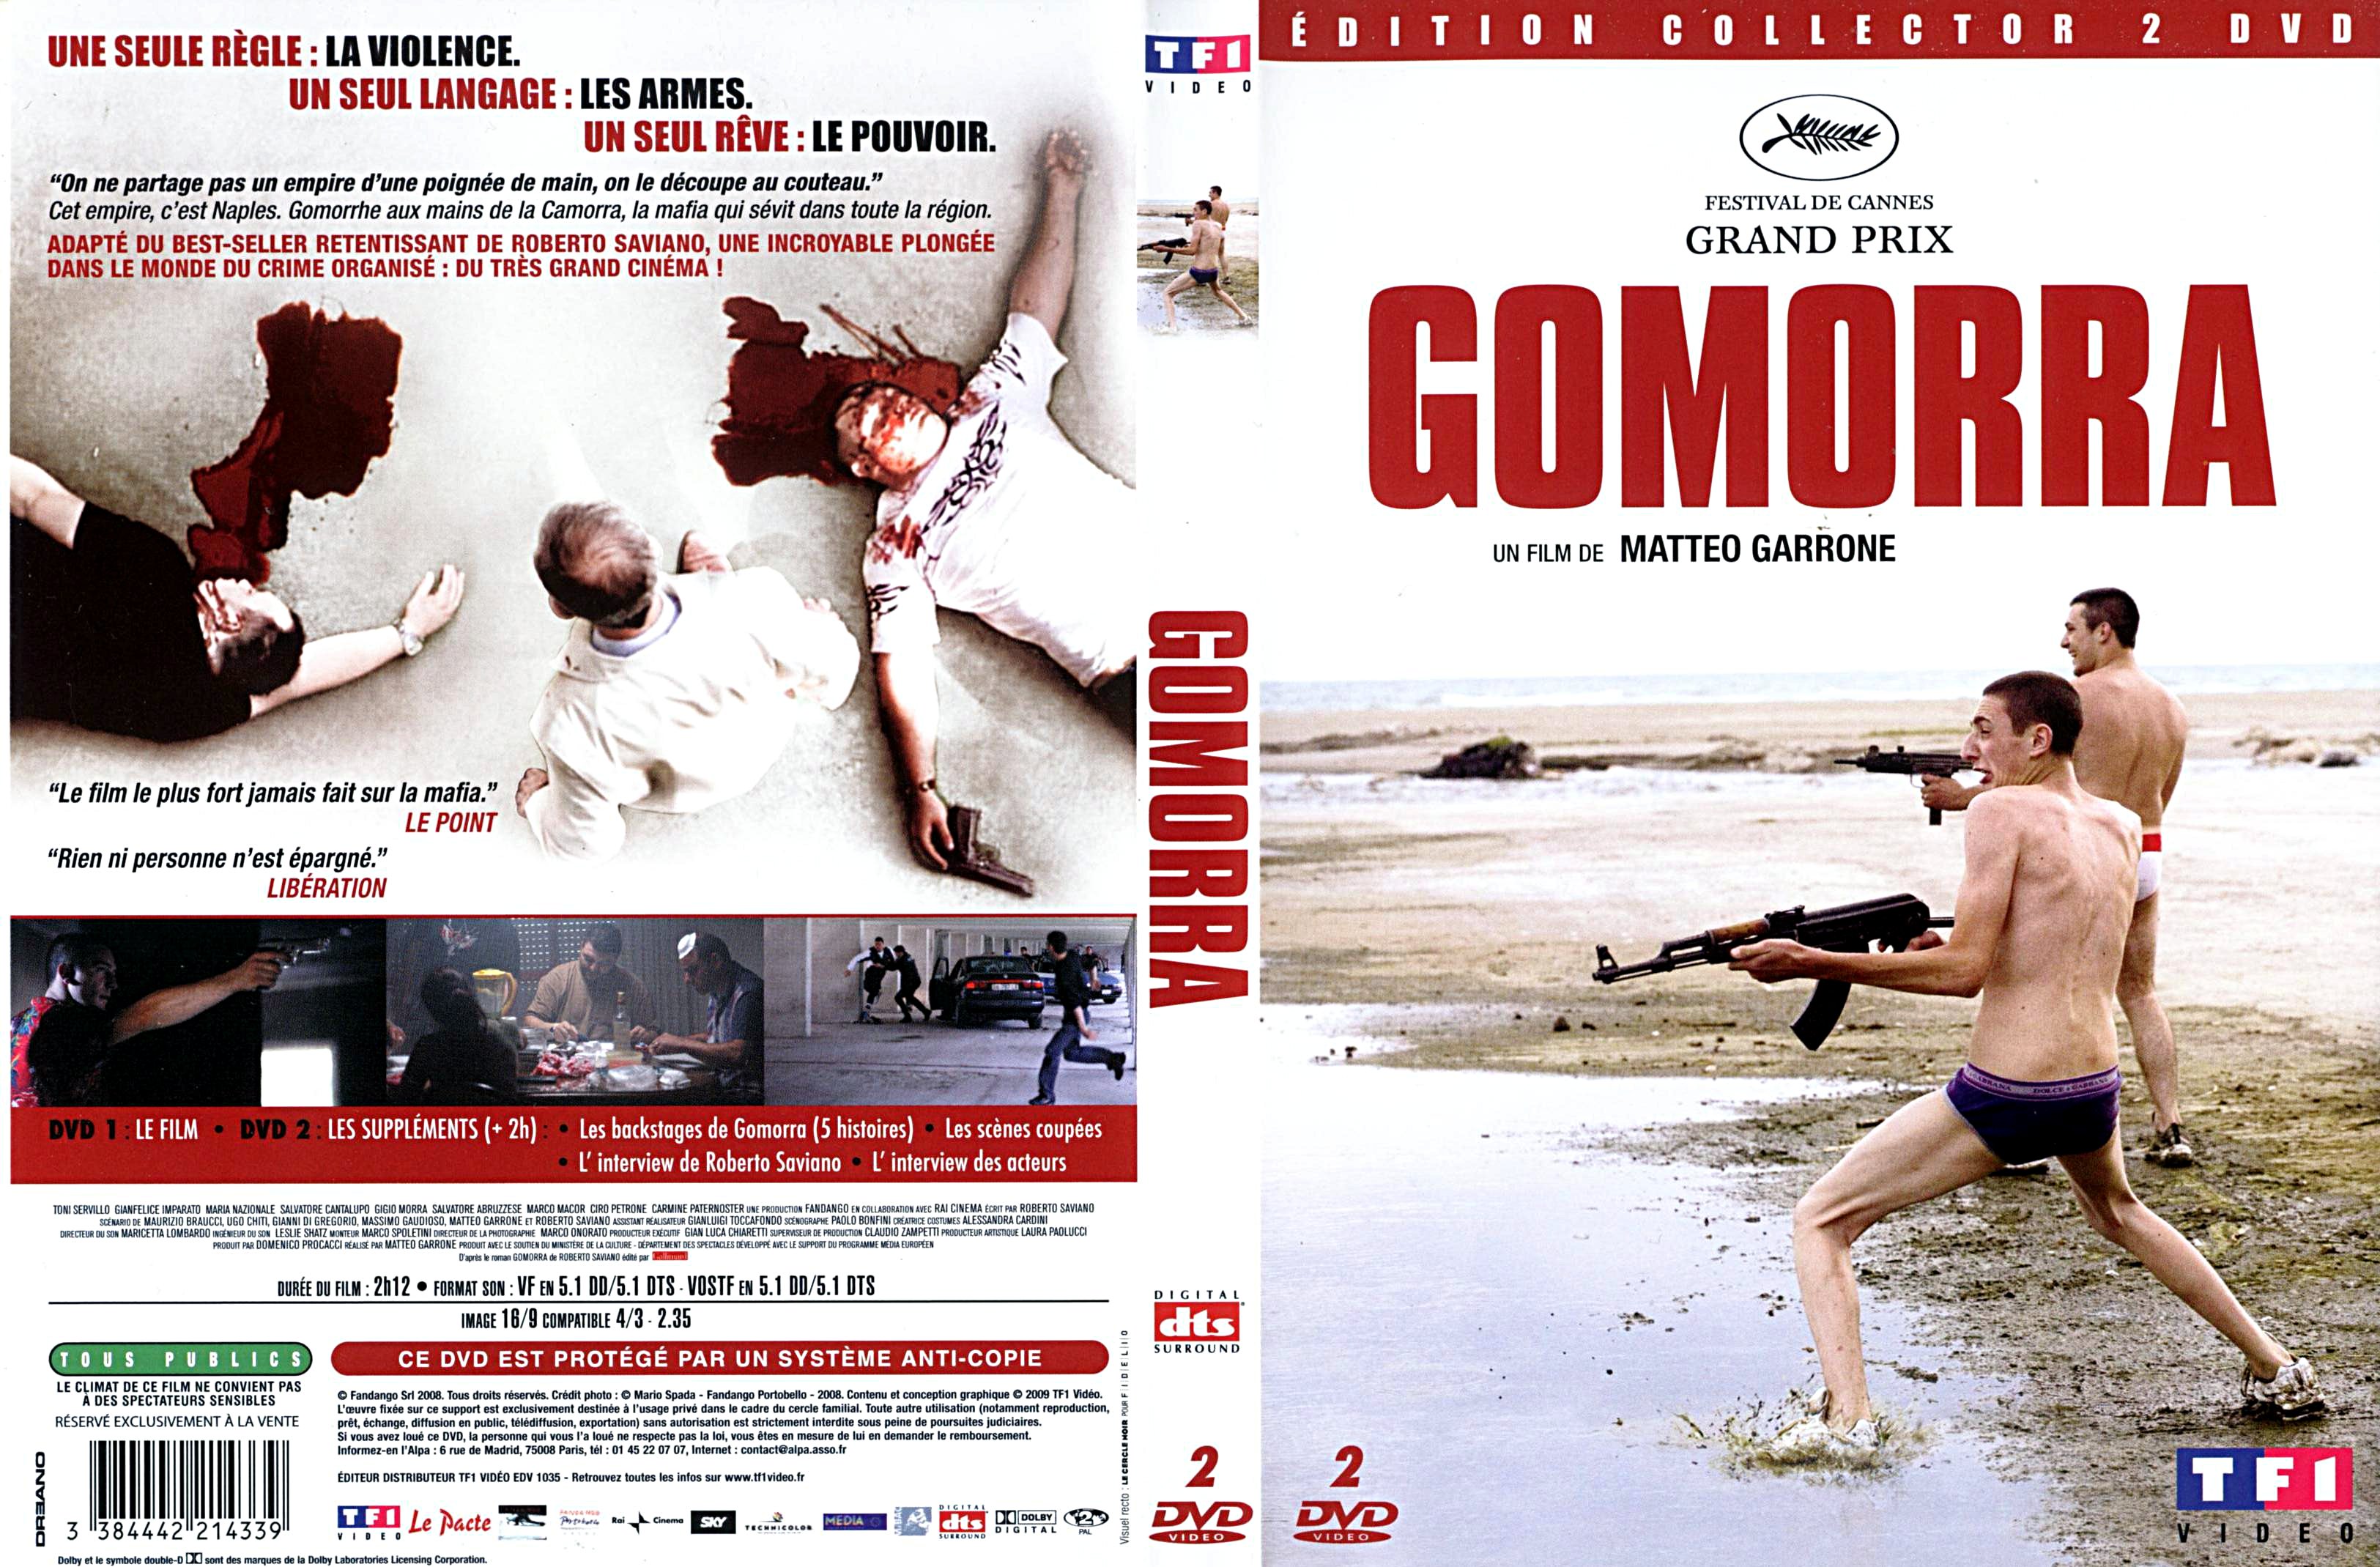 Jaquette DVD Gomorra v3